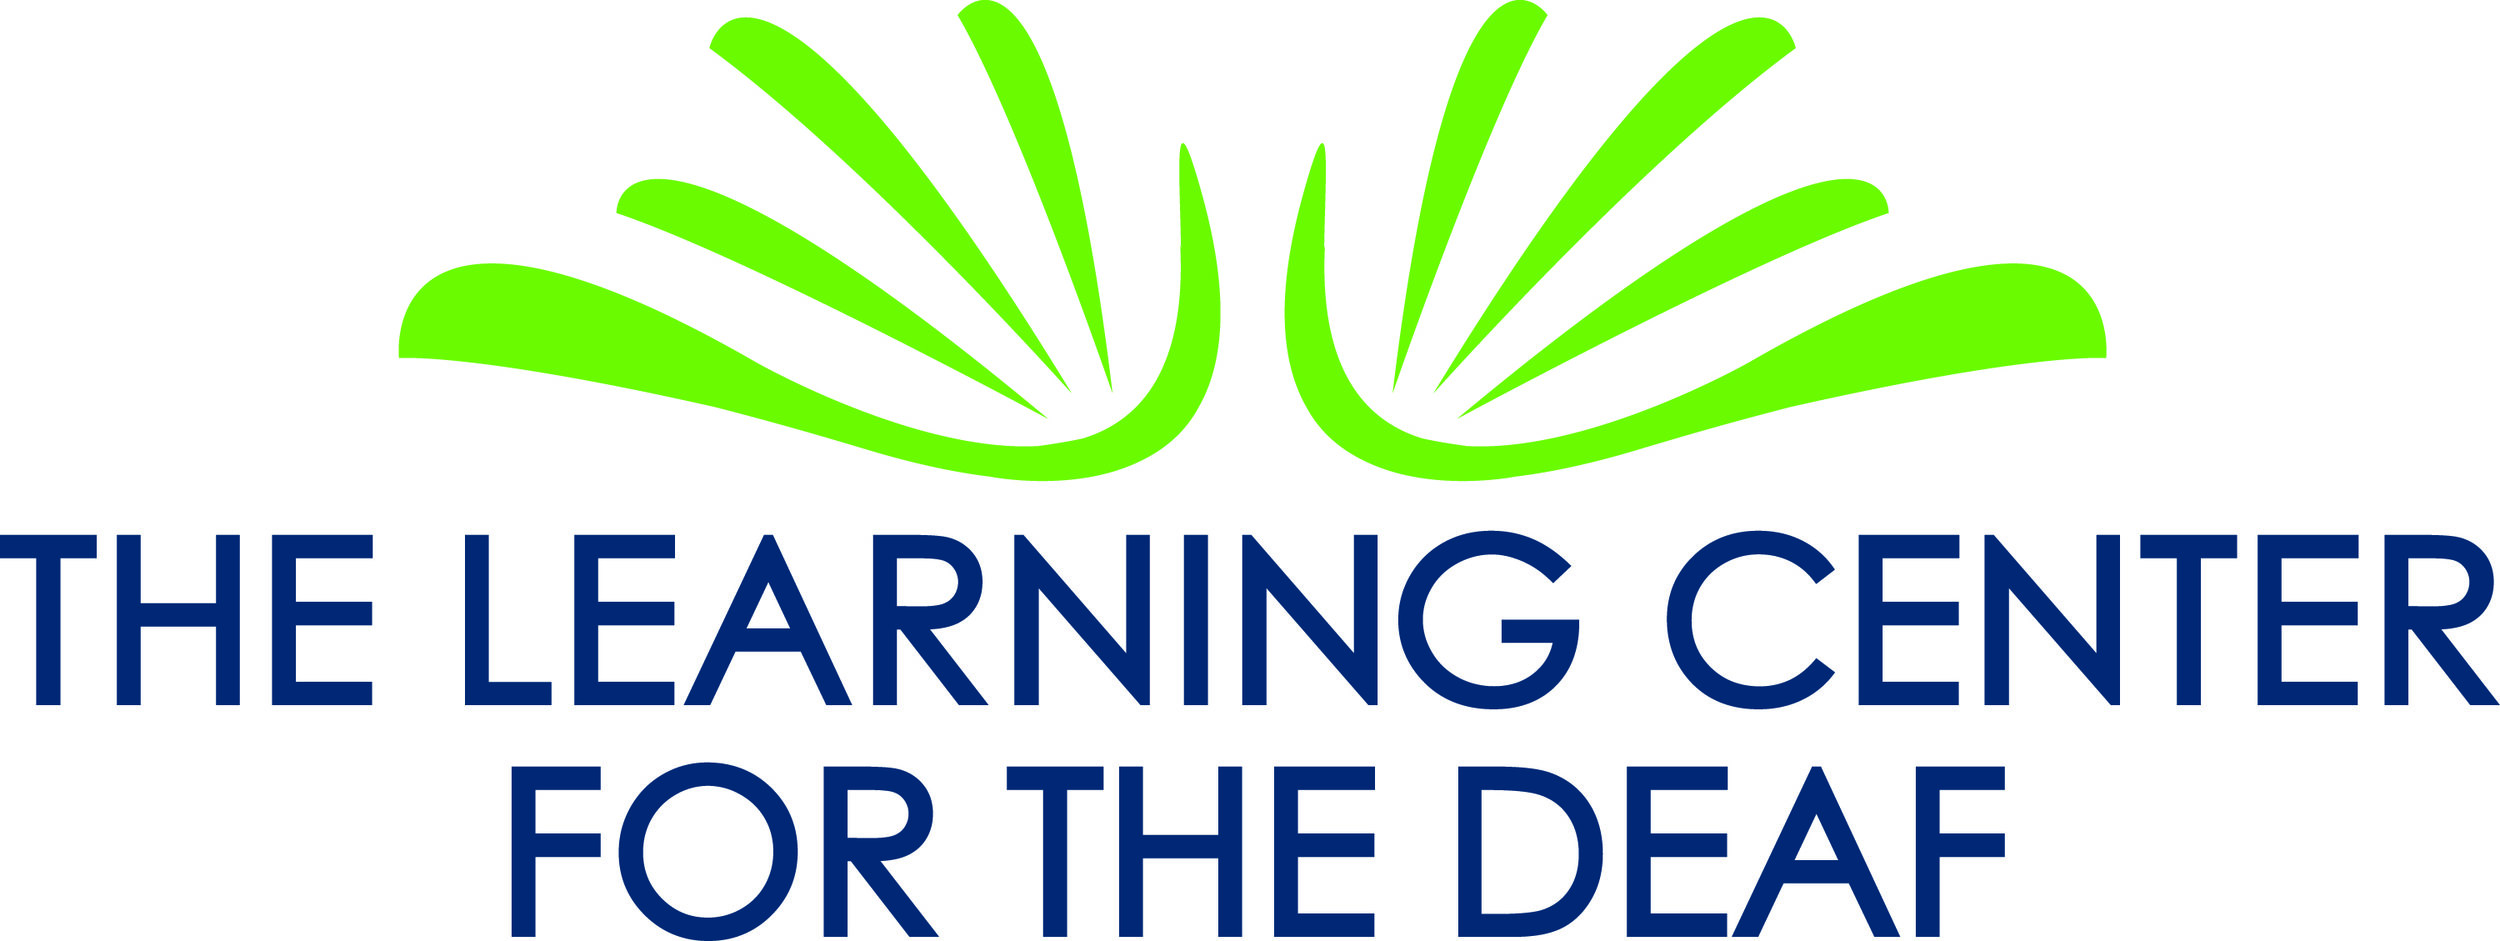 Learning Center for the Deaf